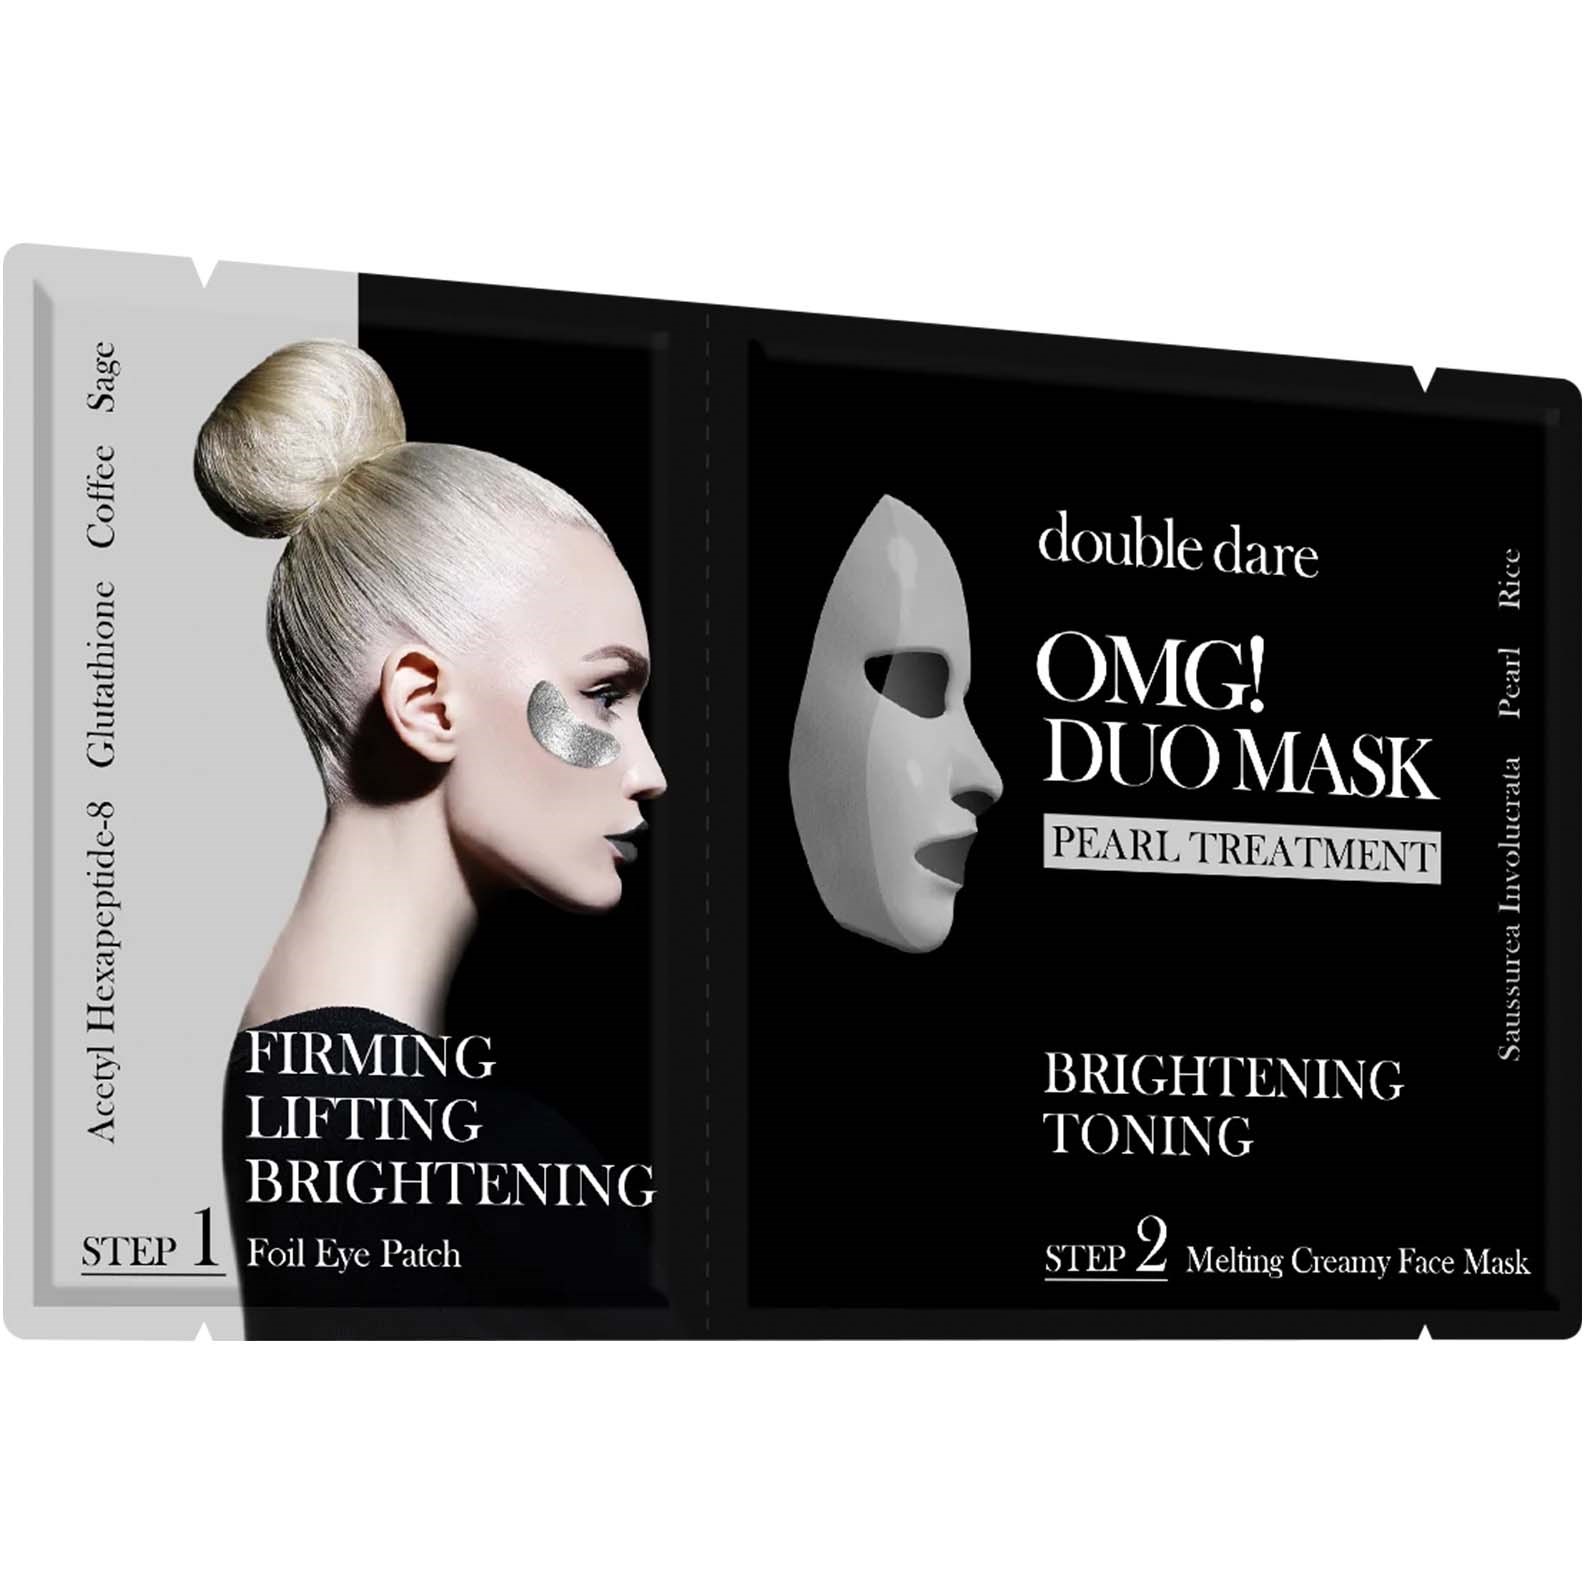 Bilde av Omg! Double Dare Duo Mask Pearl Treatment